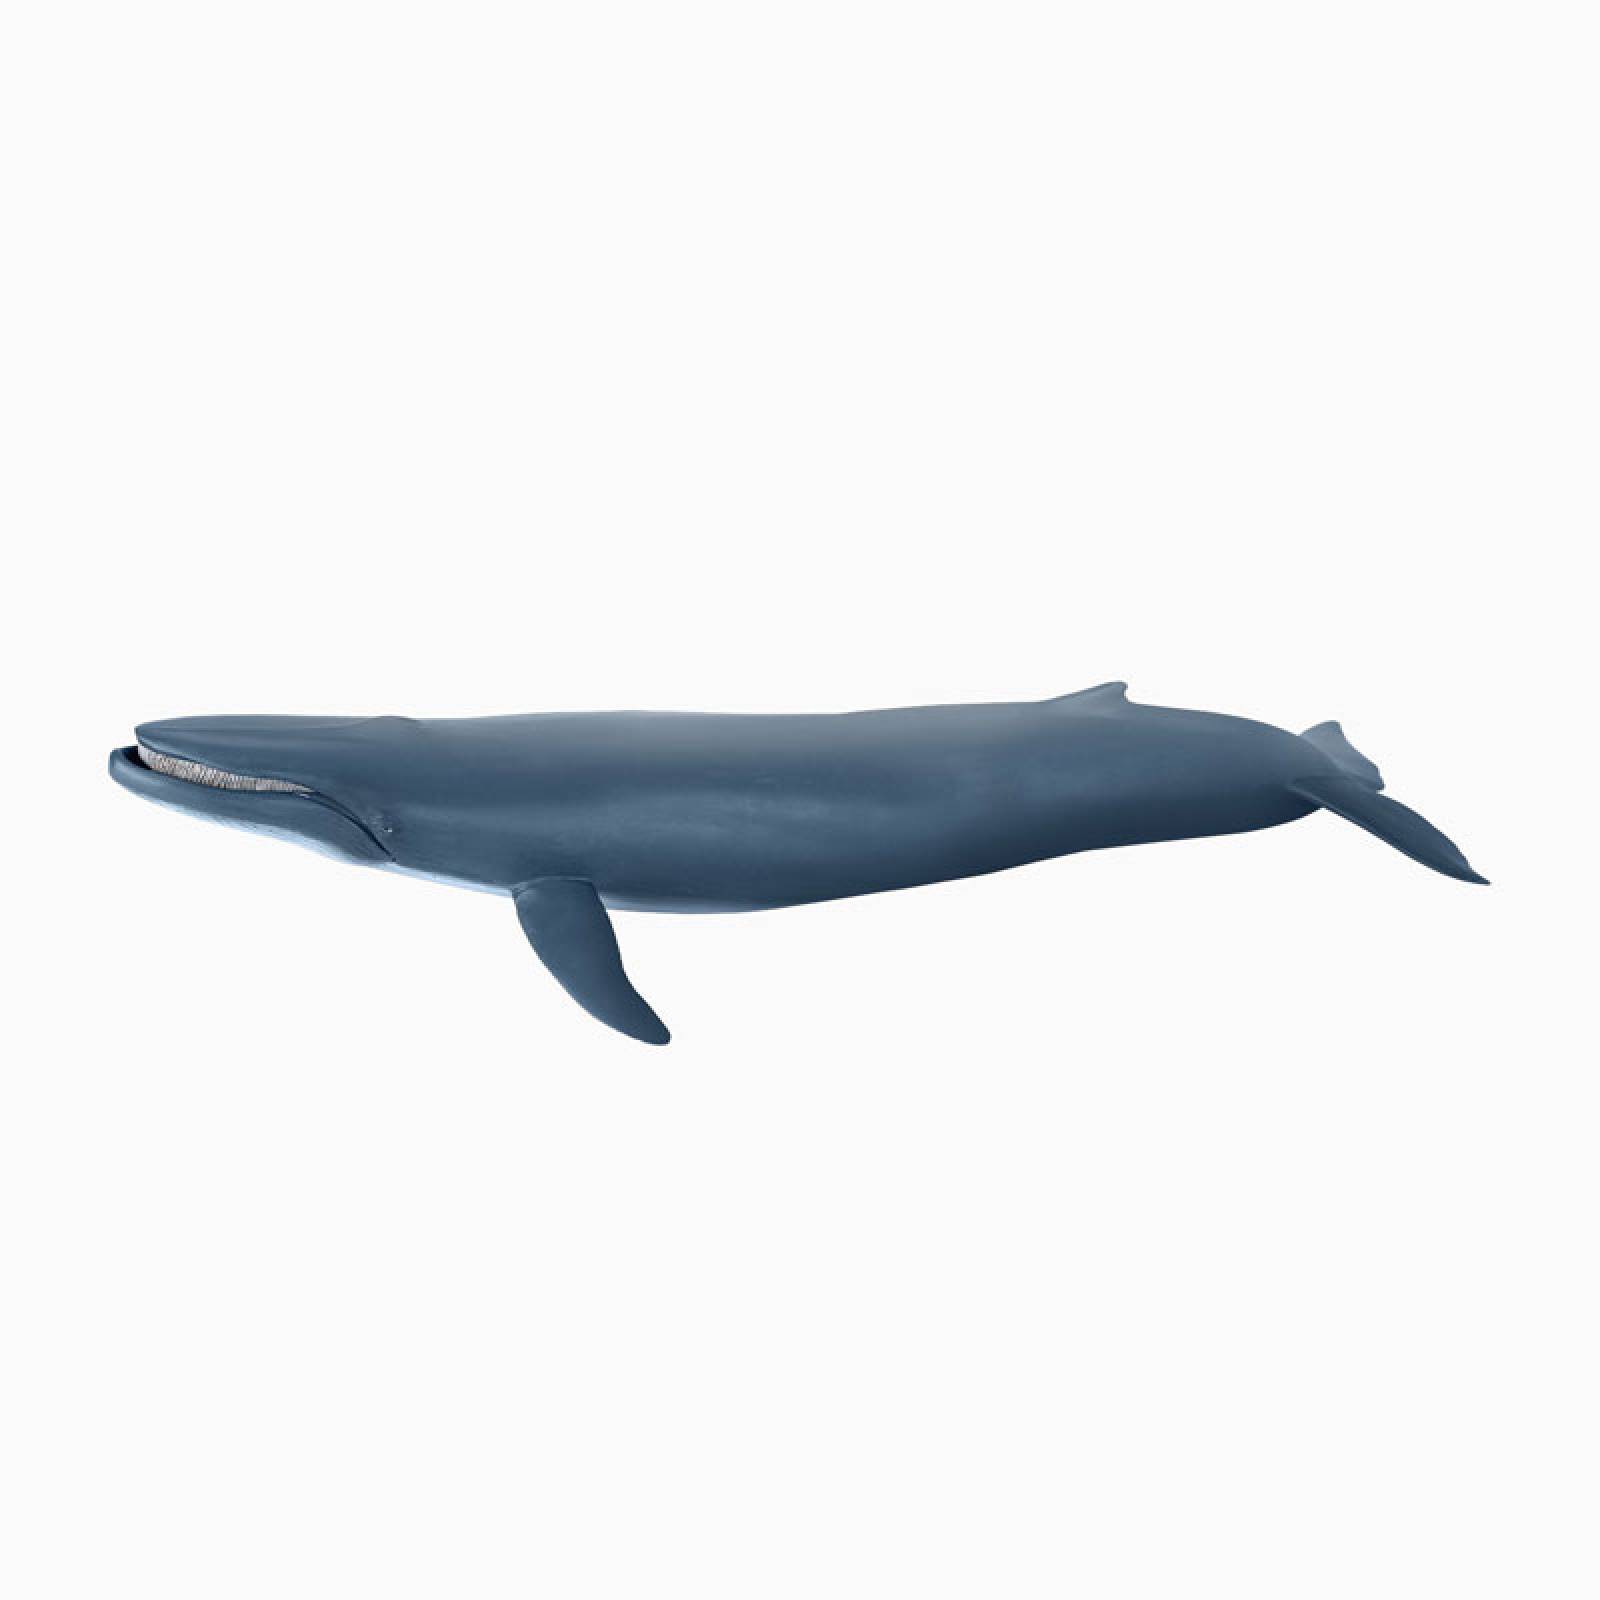 Blue Whale - Papo Wild Animal Figure